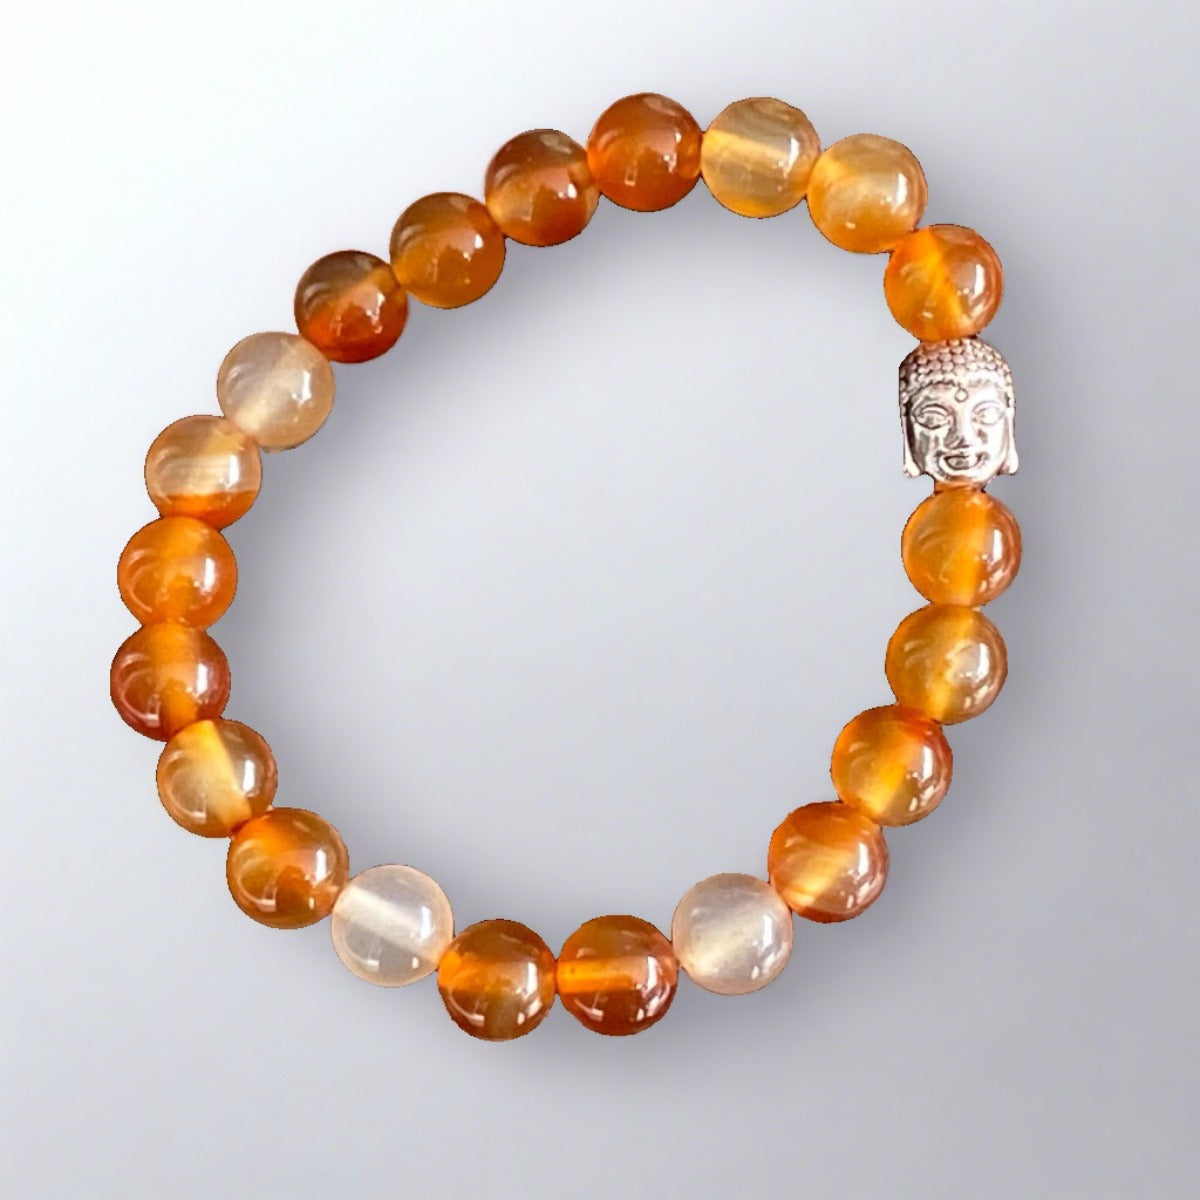 Buddha charm bracelet with carnelian stones for positivity